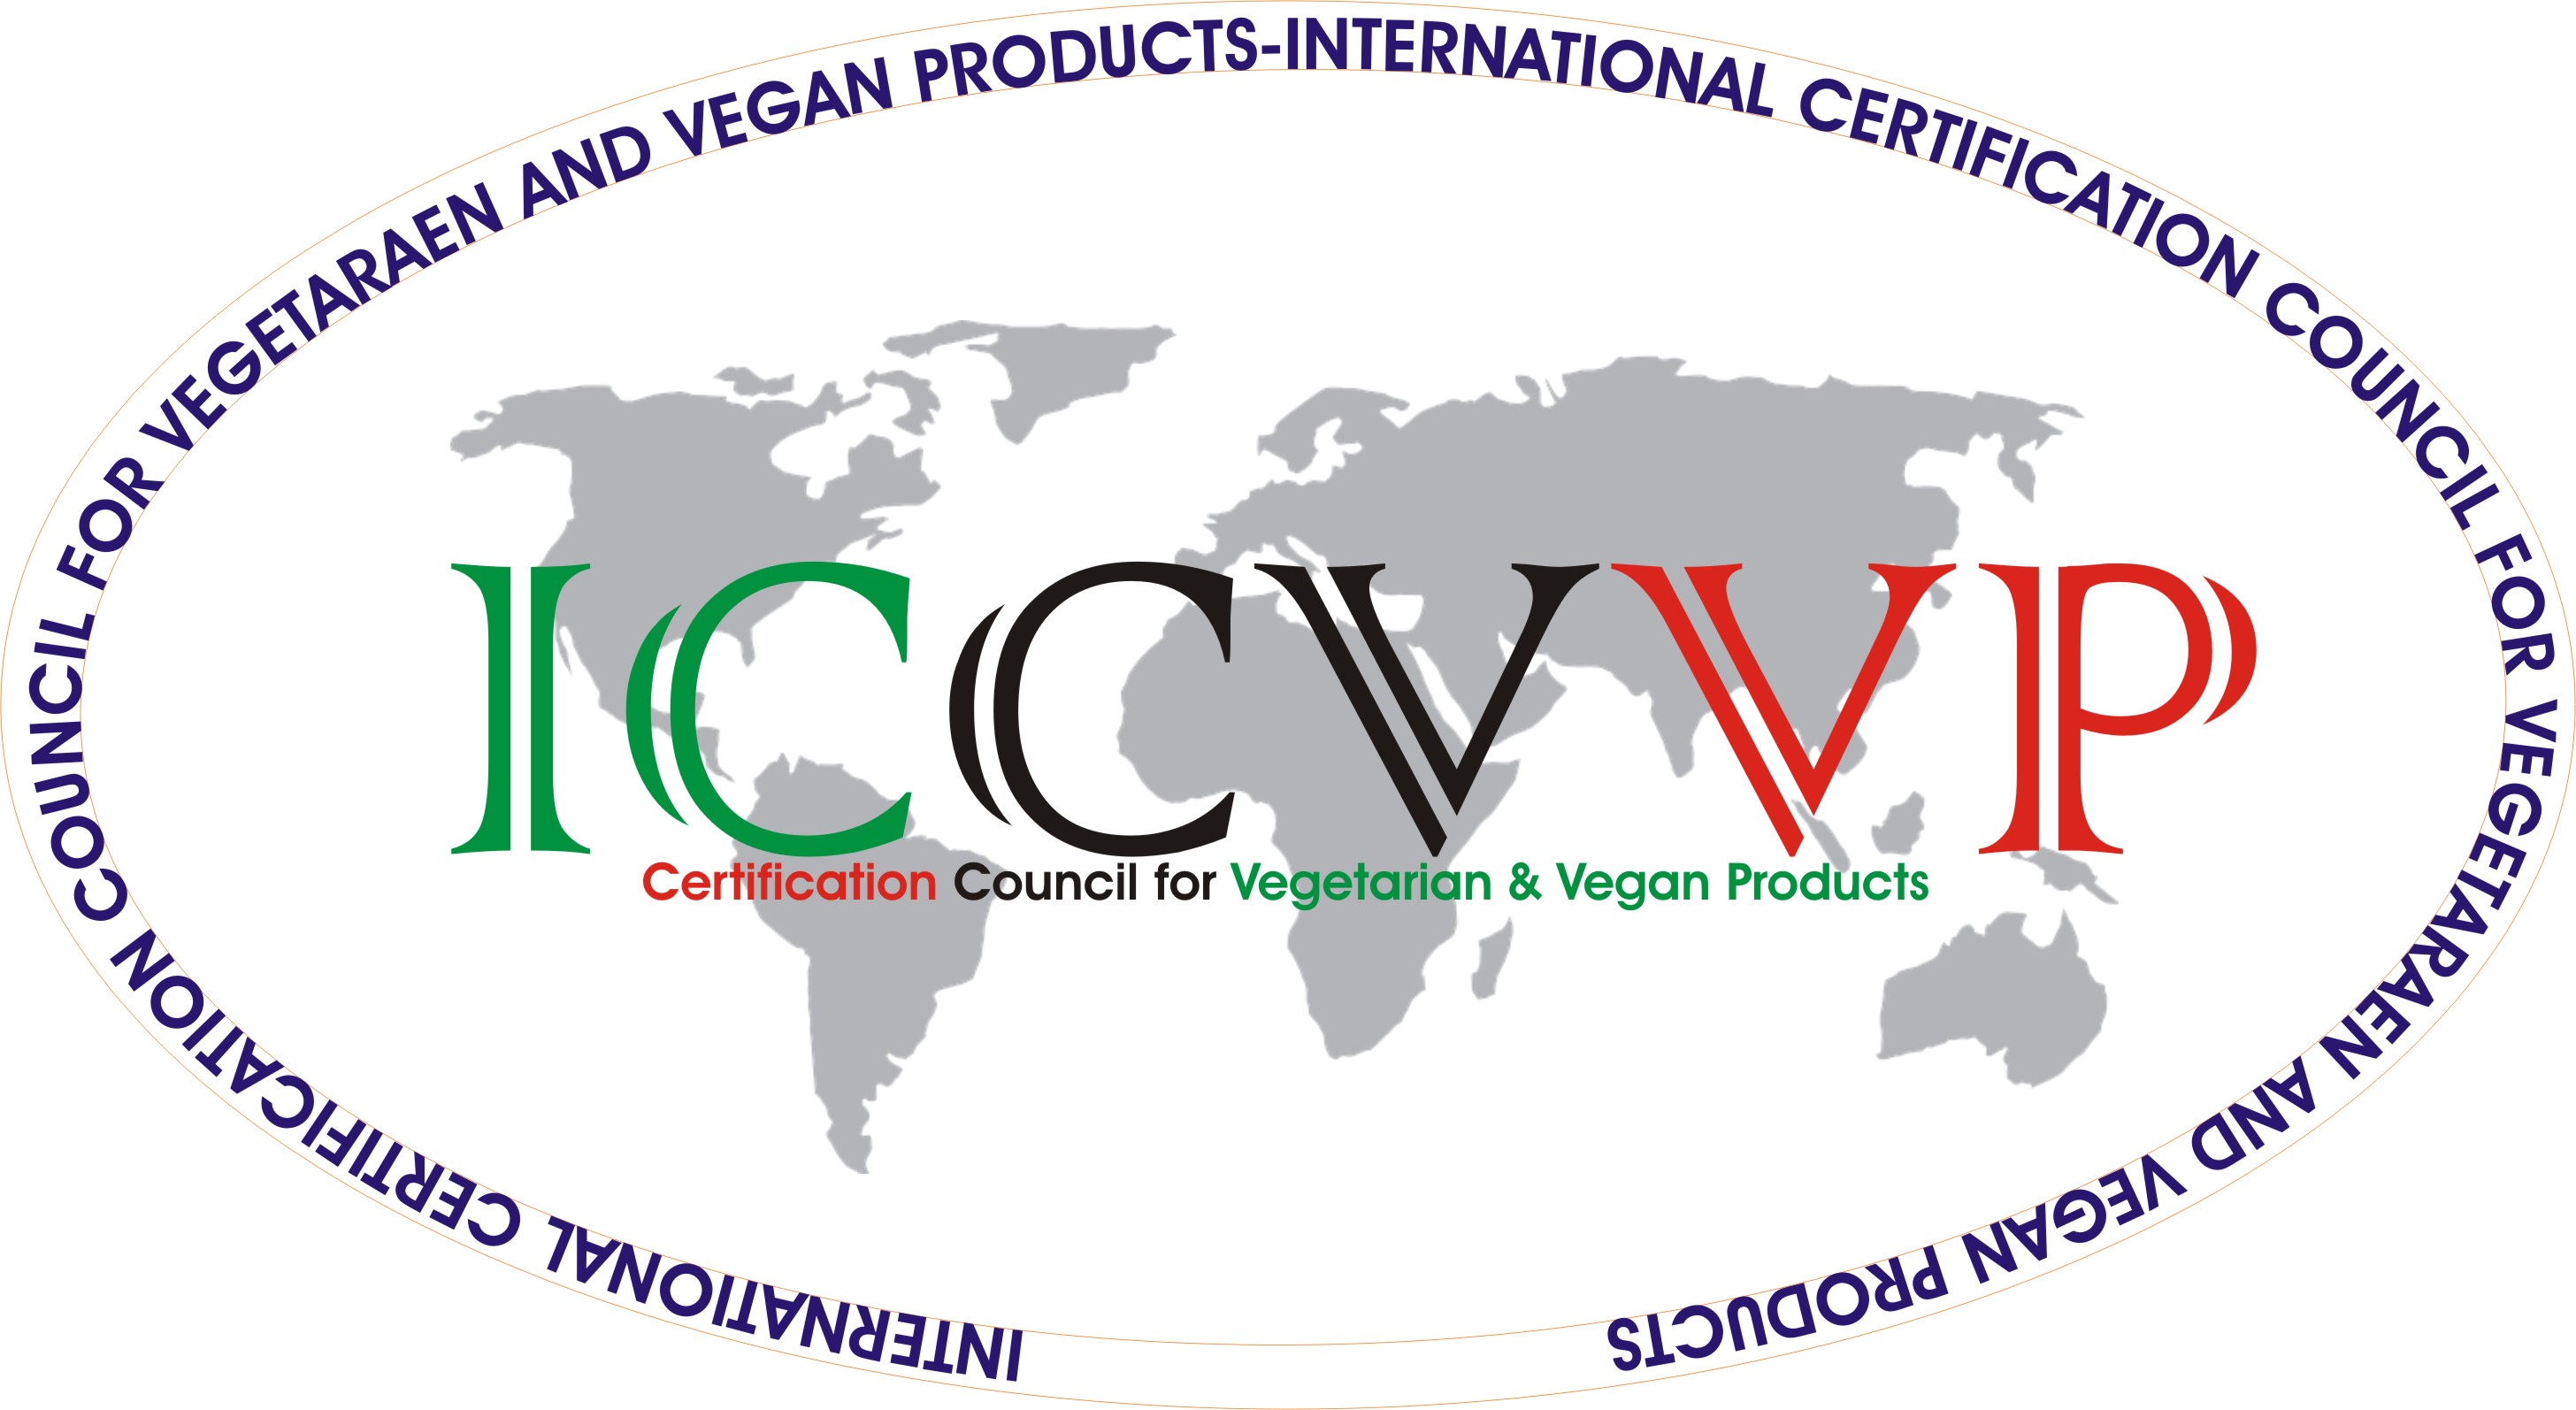 The ICCVVP Logo